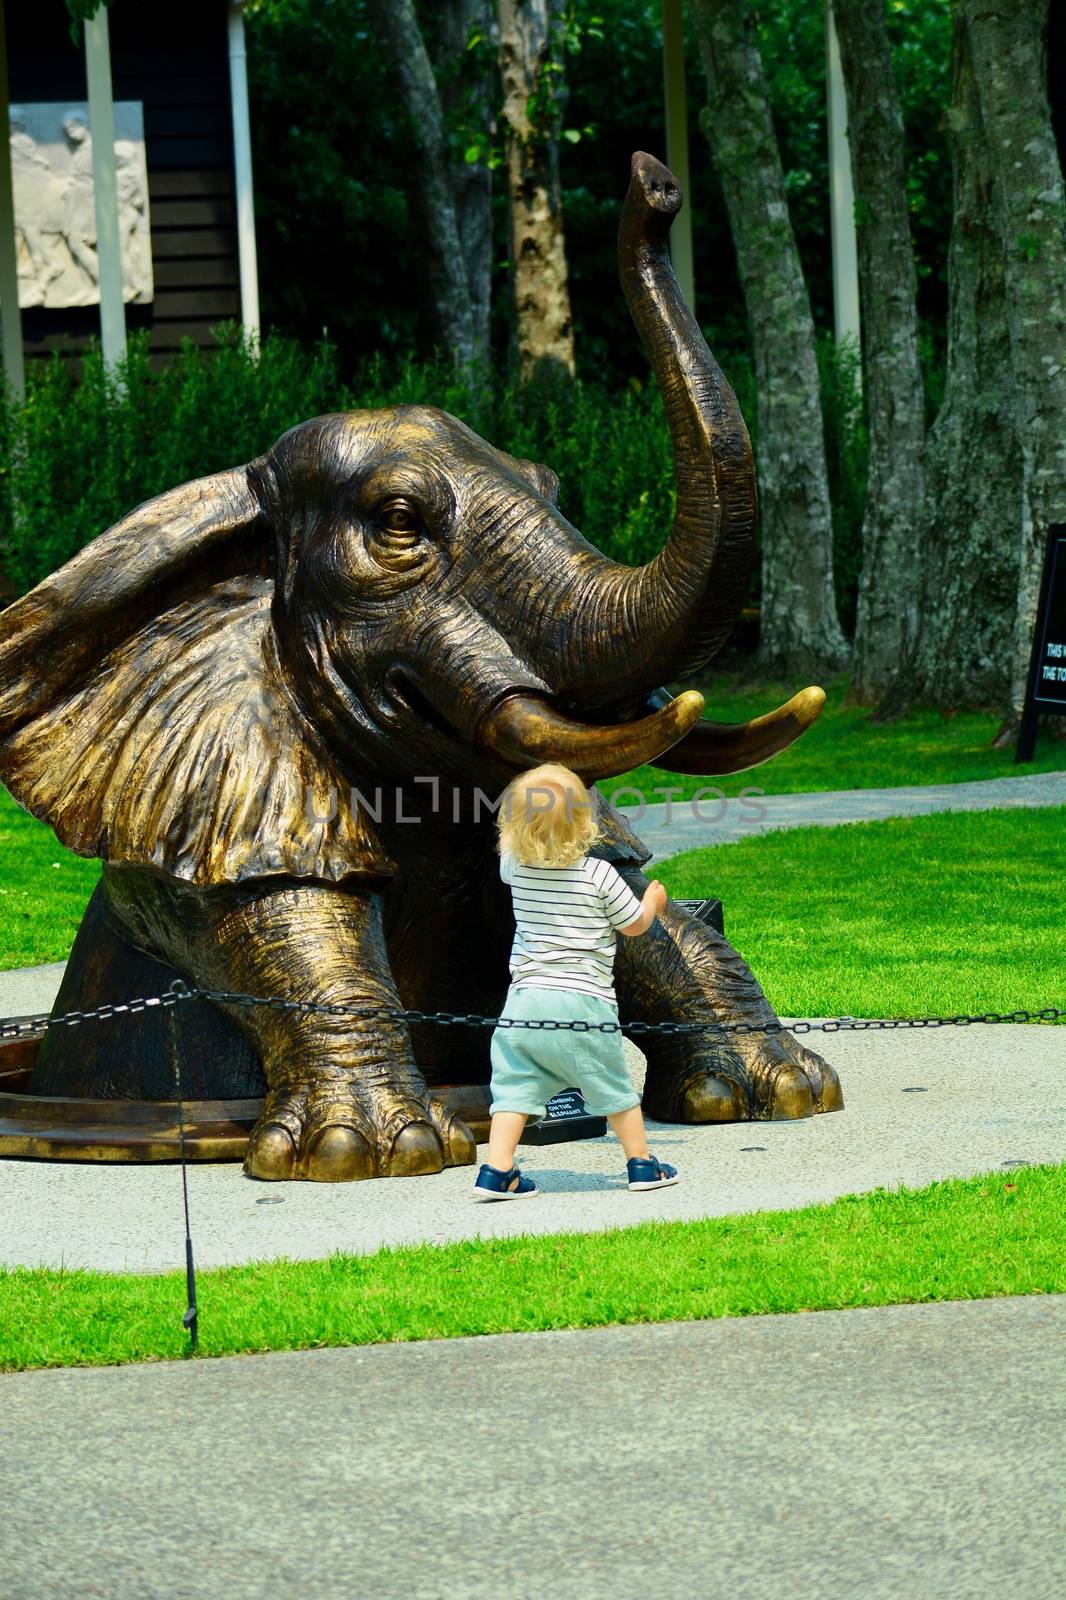 Matakana, New Zealand - Dec 2019: Sculptureum sculpture park. Bronze sculpture representing an elephant climbing out of a manhole, and a cute little child fascinated by the elephant. by Marshalkina